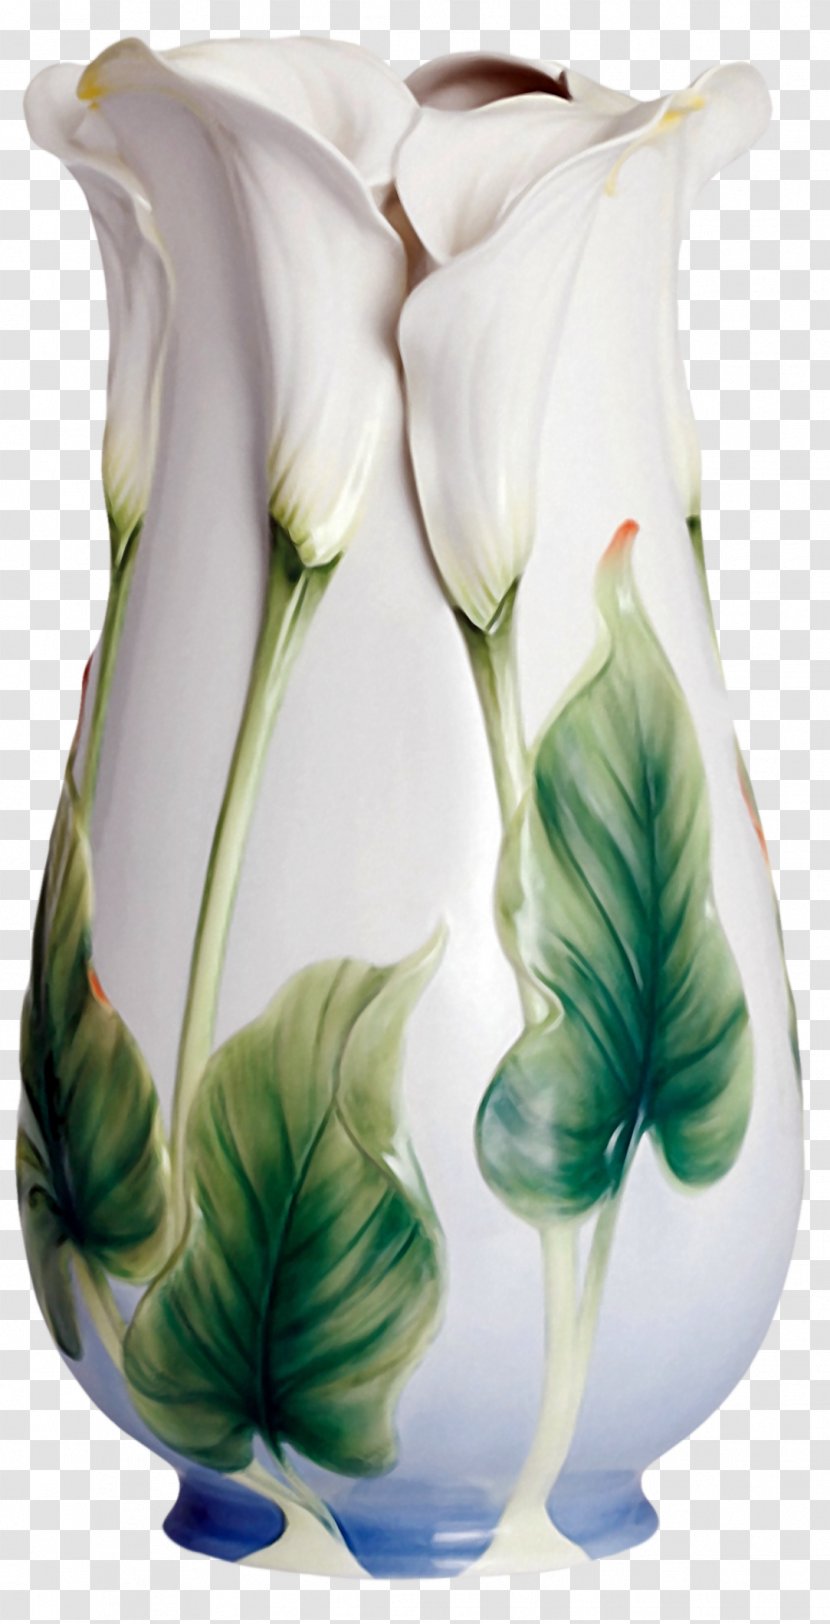 Franz-porcelains Chinese Ceramics Jingdezhen - Vase Transparent PNG